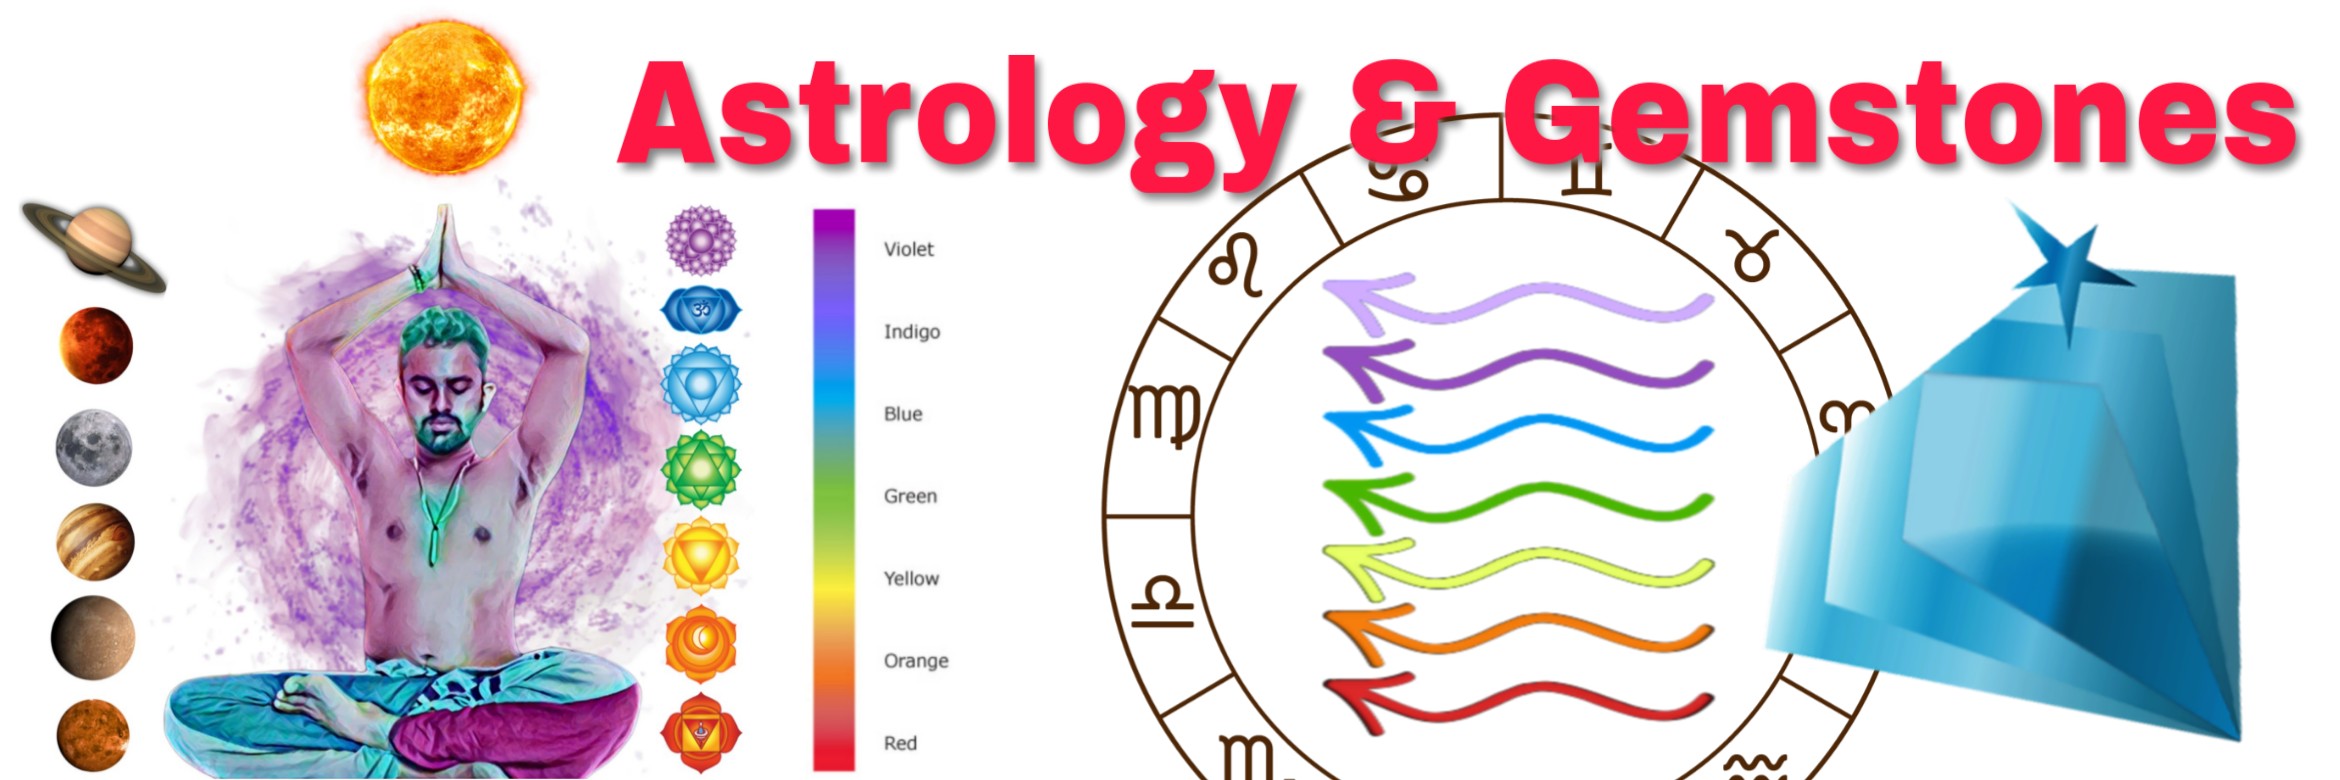 astrology and gemstones